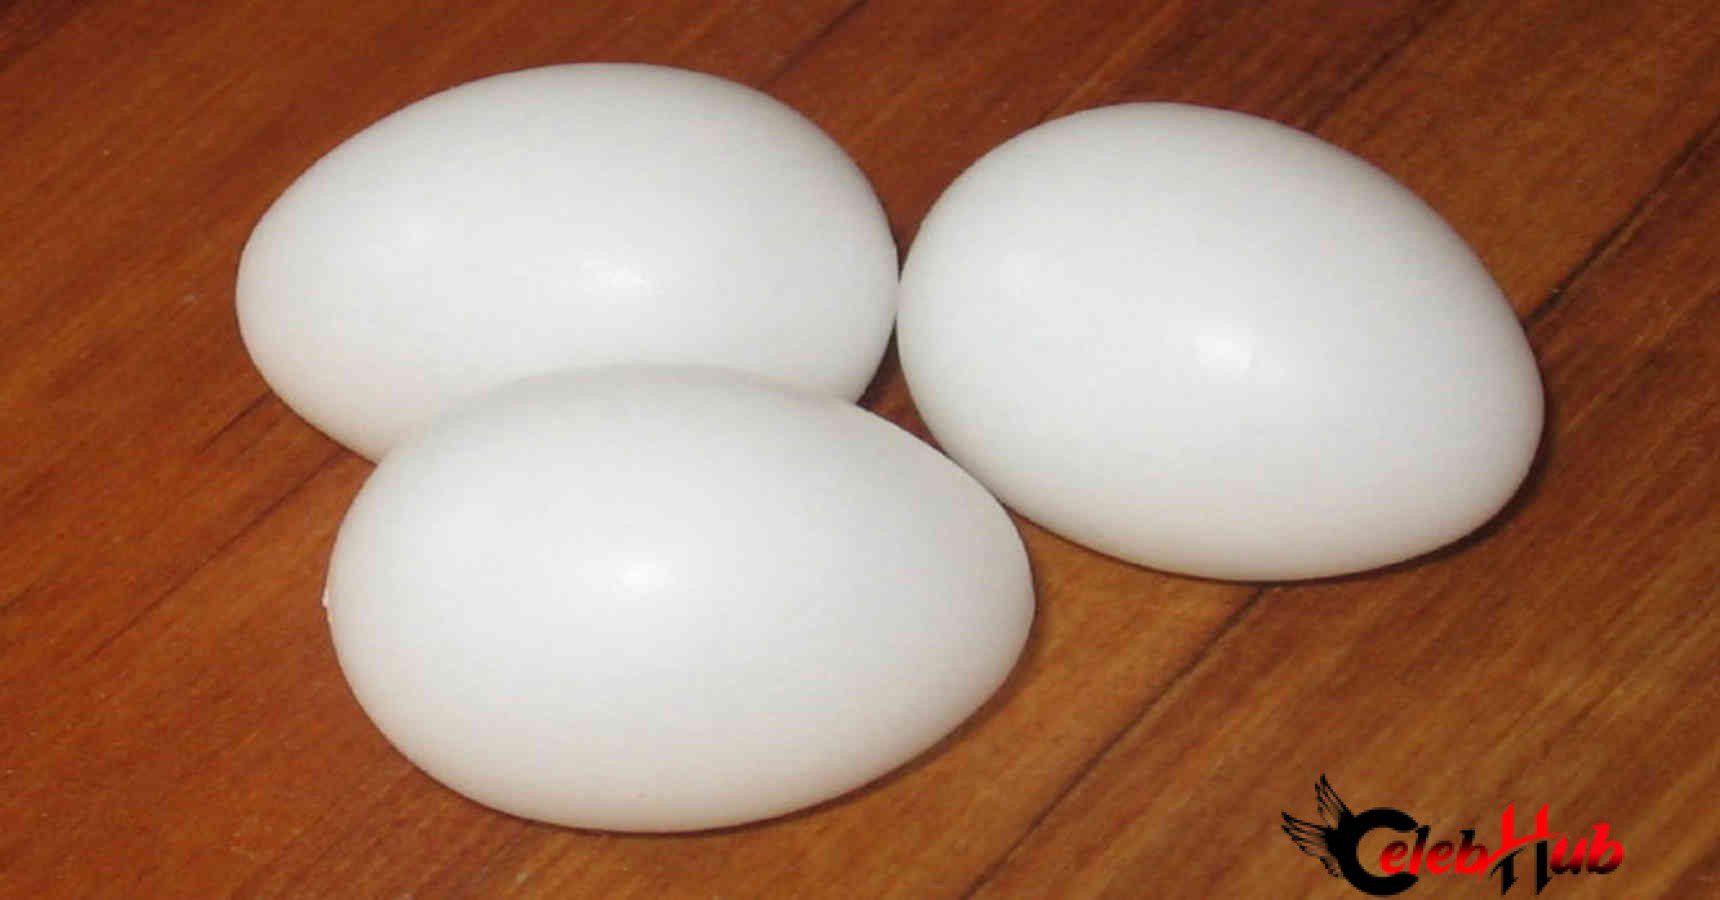 Plastic egg